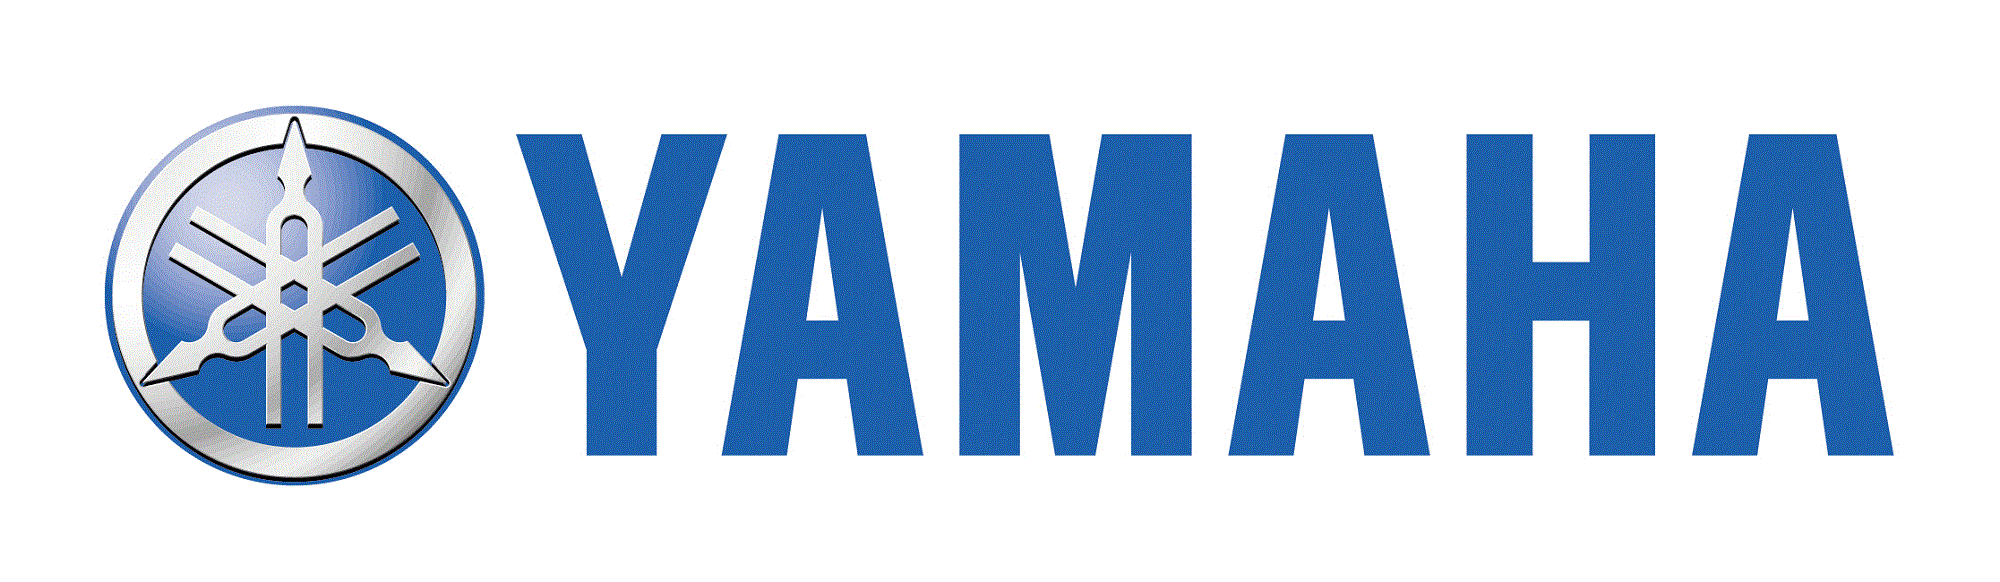 Yamaha Motocross Logo - Announcing Yamaha Contingency